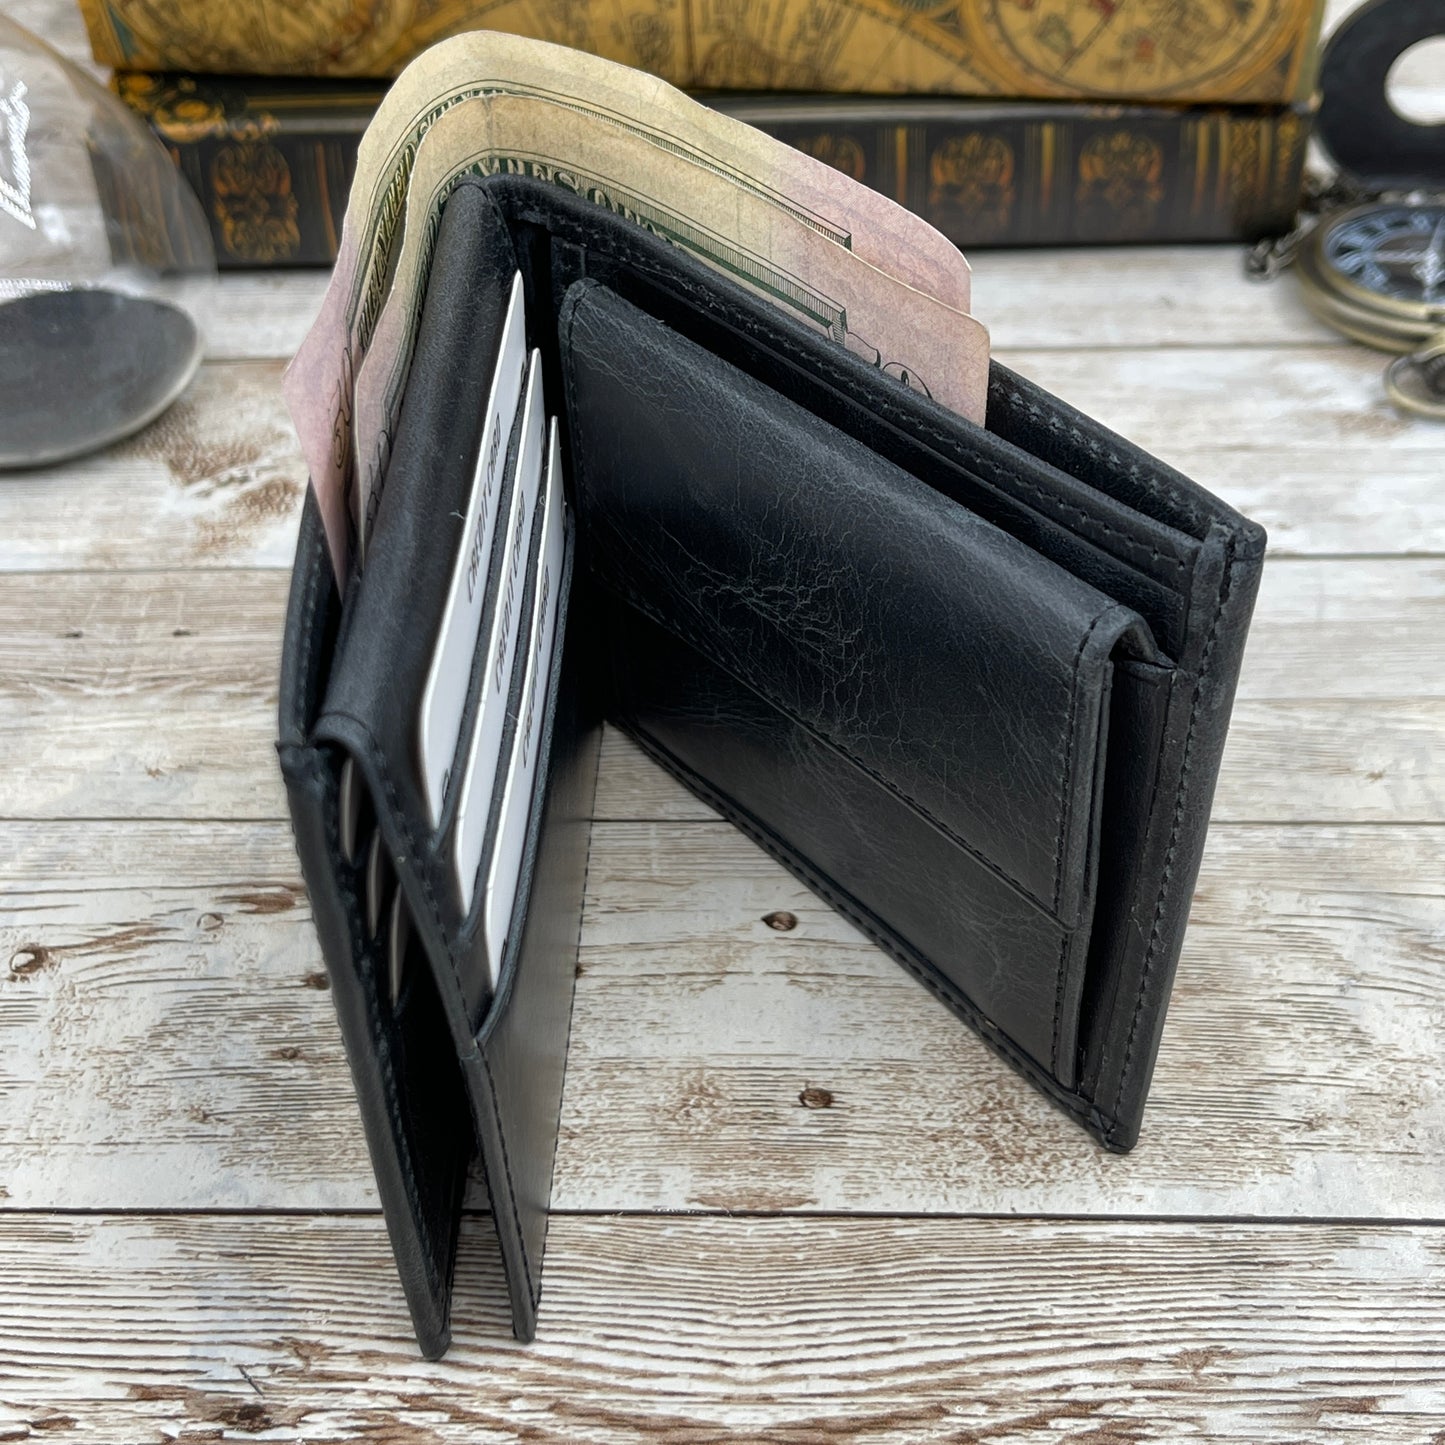 Antic Black Handmade Leather Wallet